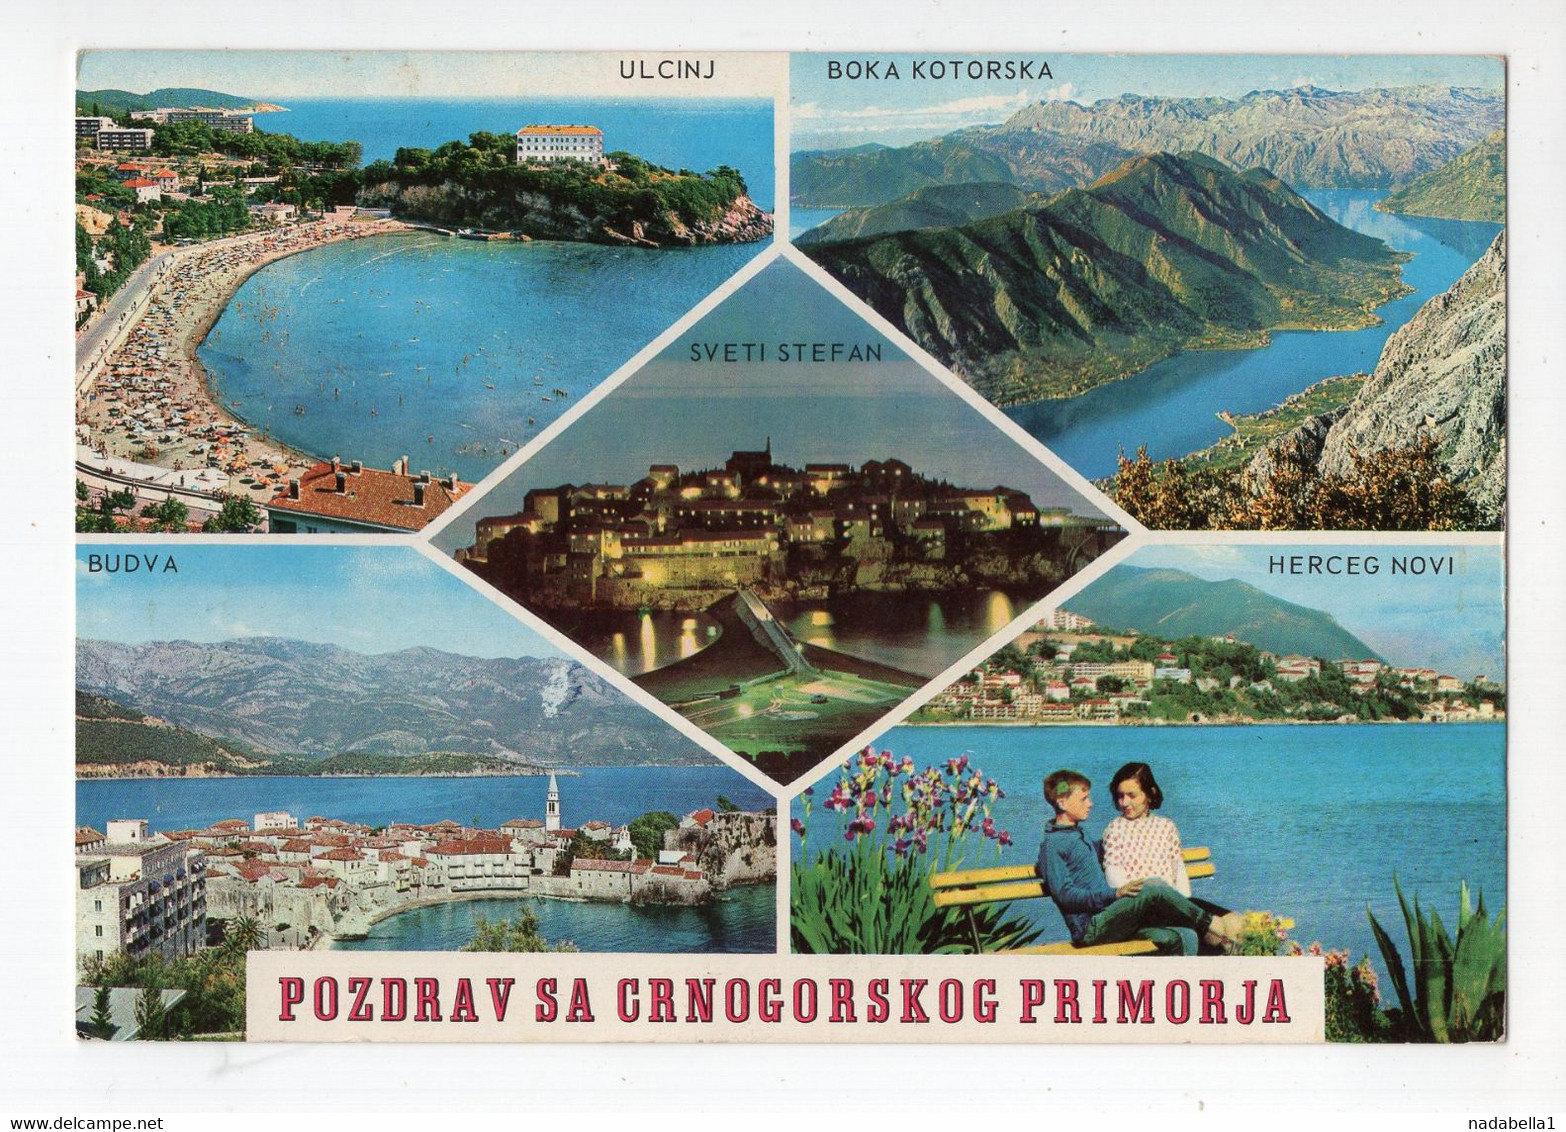 1973. YUGOSLAVIA,SERBIA,BELGRADE,AIRMAIL TO USA,MONTENEGRO MULTI VIEW POSTCARD,USED - Poste Aérienne